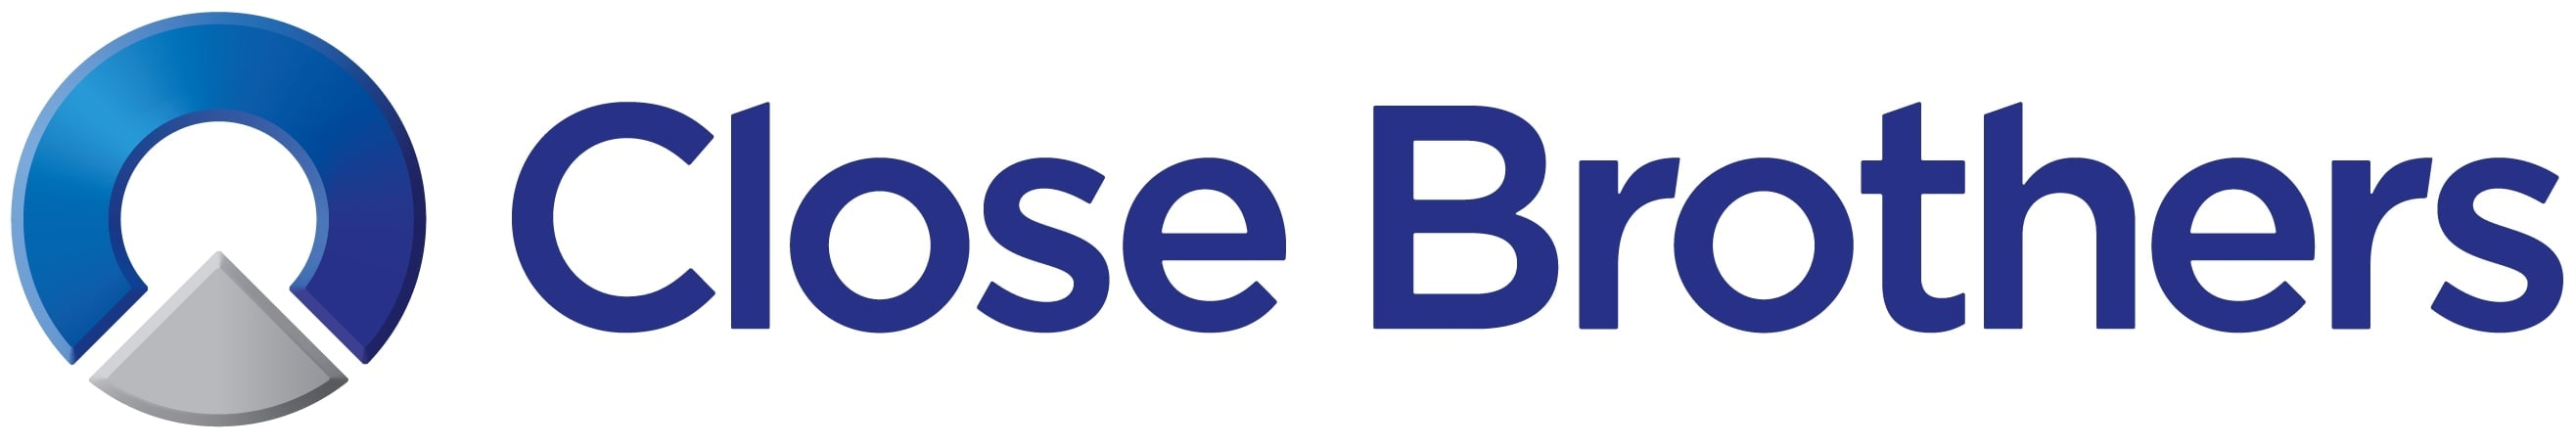 close brothers finance logo